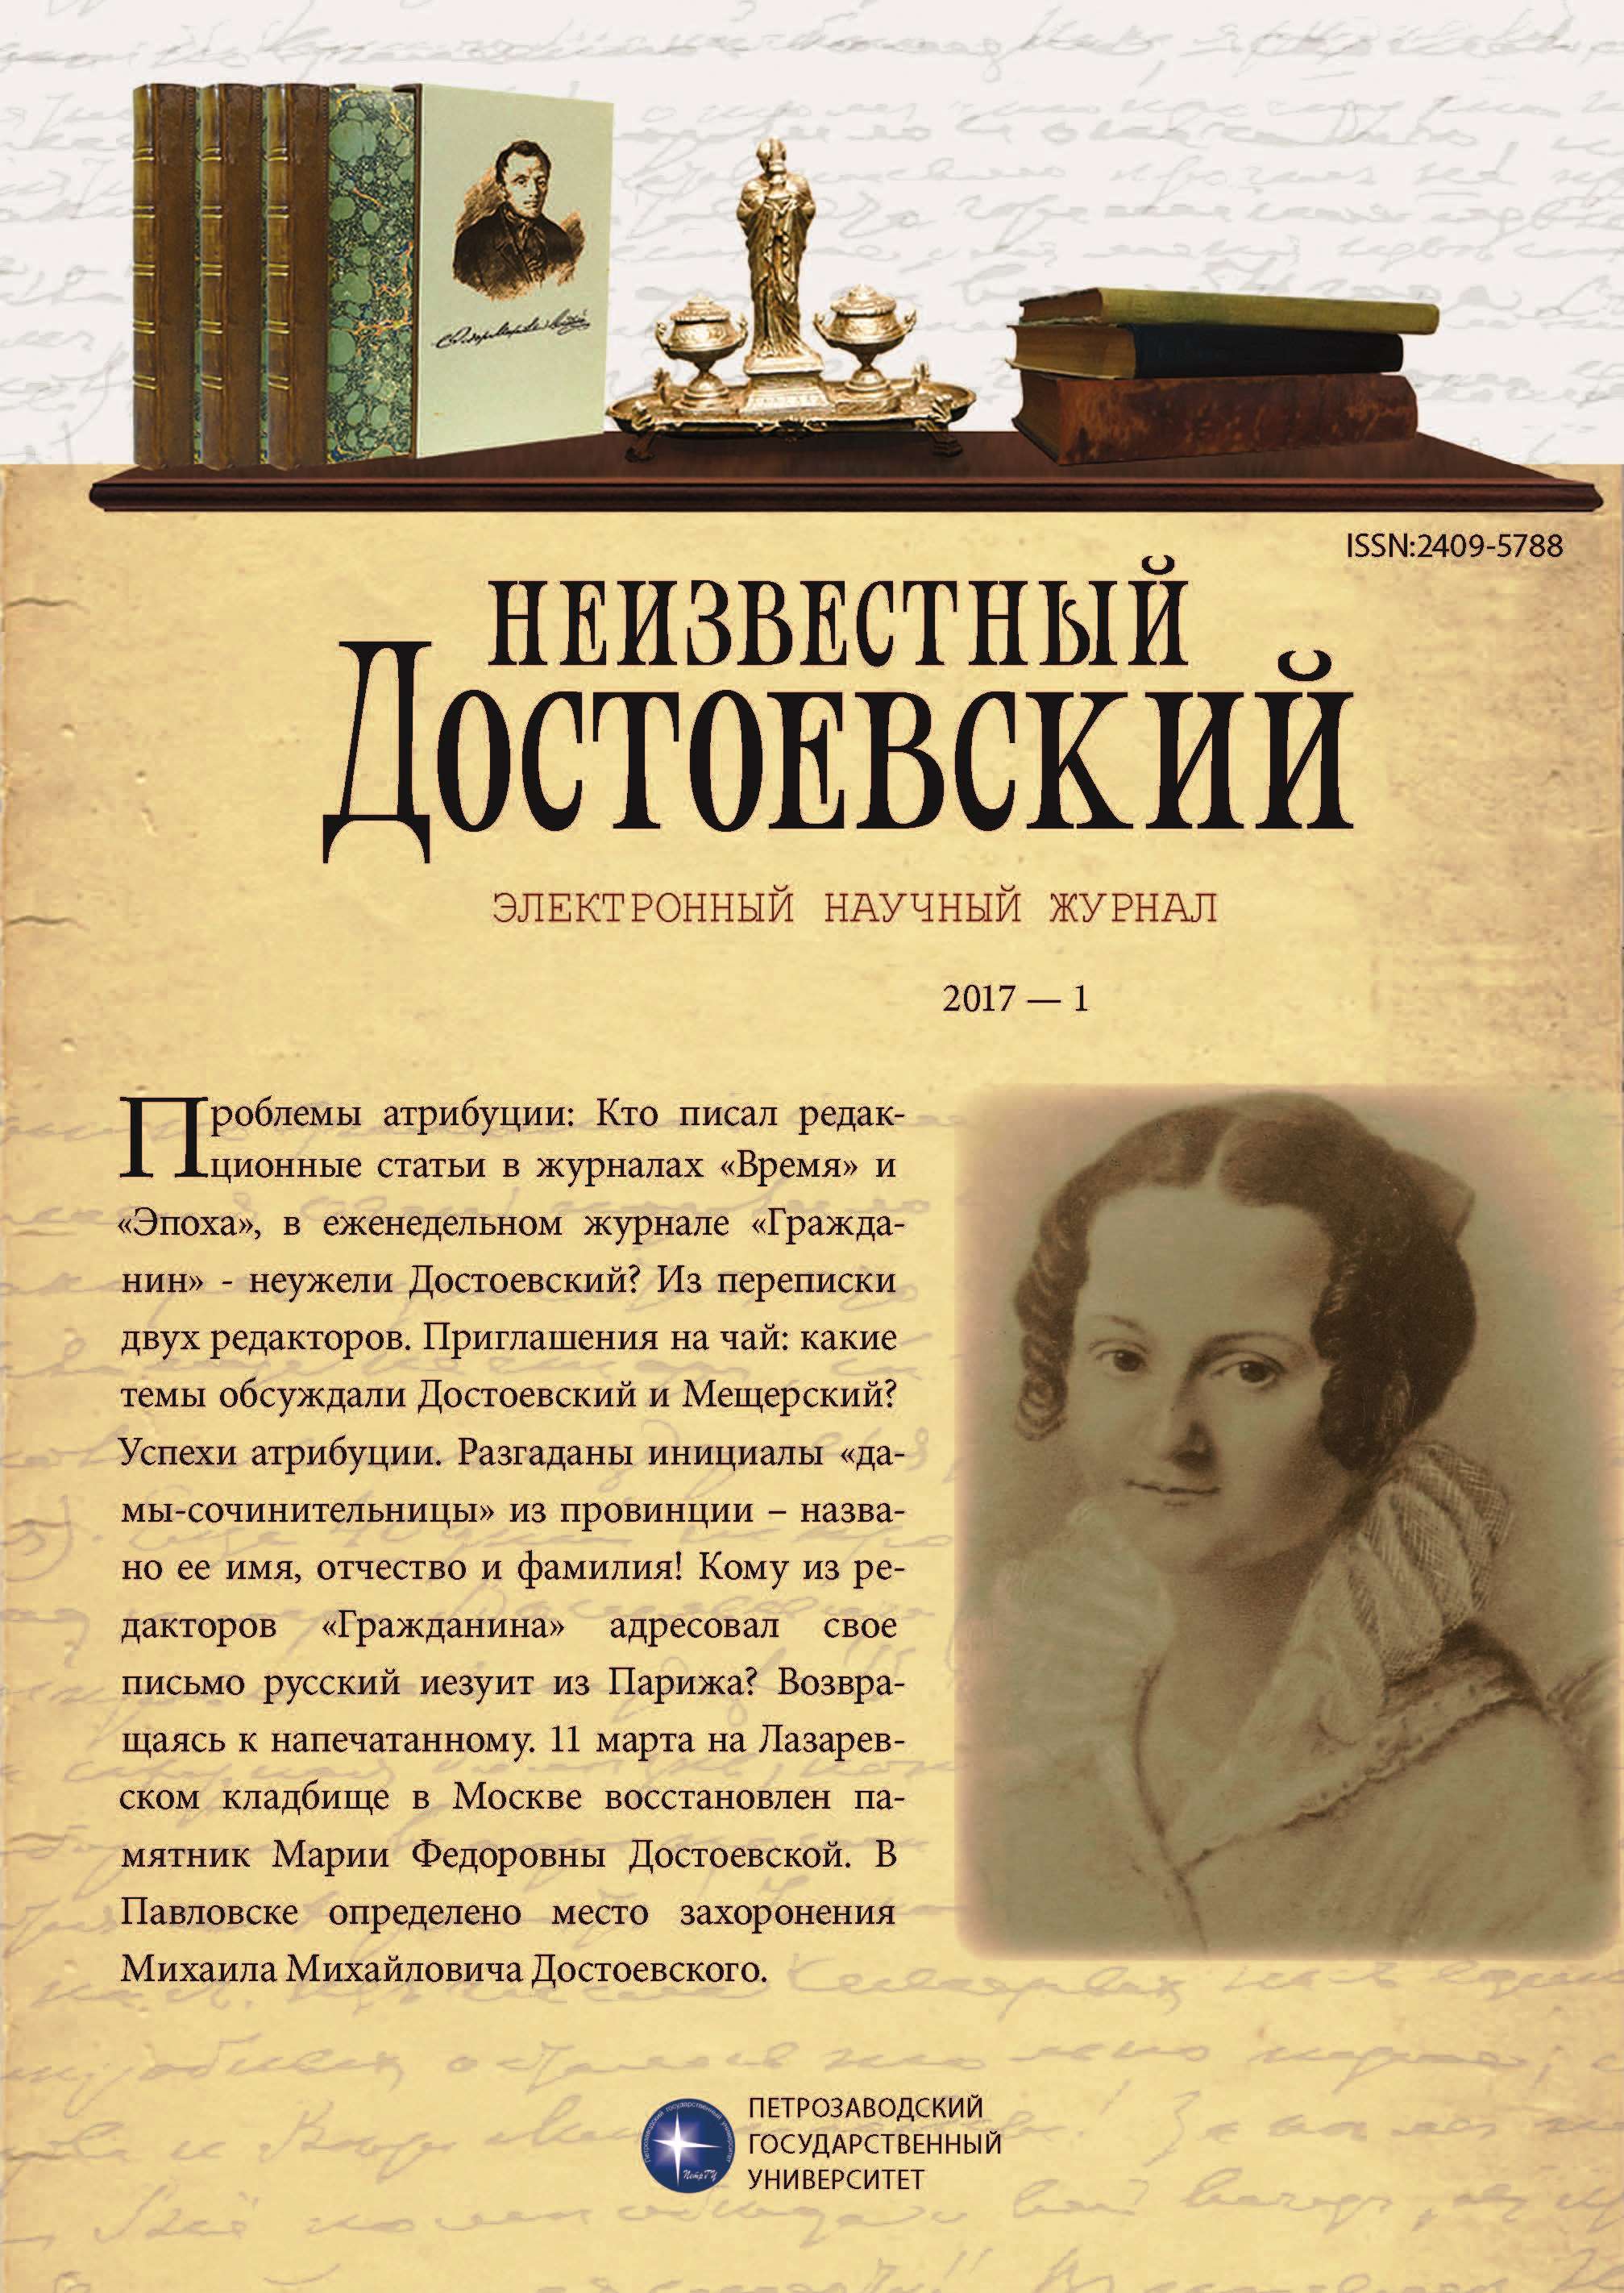 Notes on the Сorrespondence between Fyodor Dostoevsky and Vladimir Meshchersky Cover Image